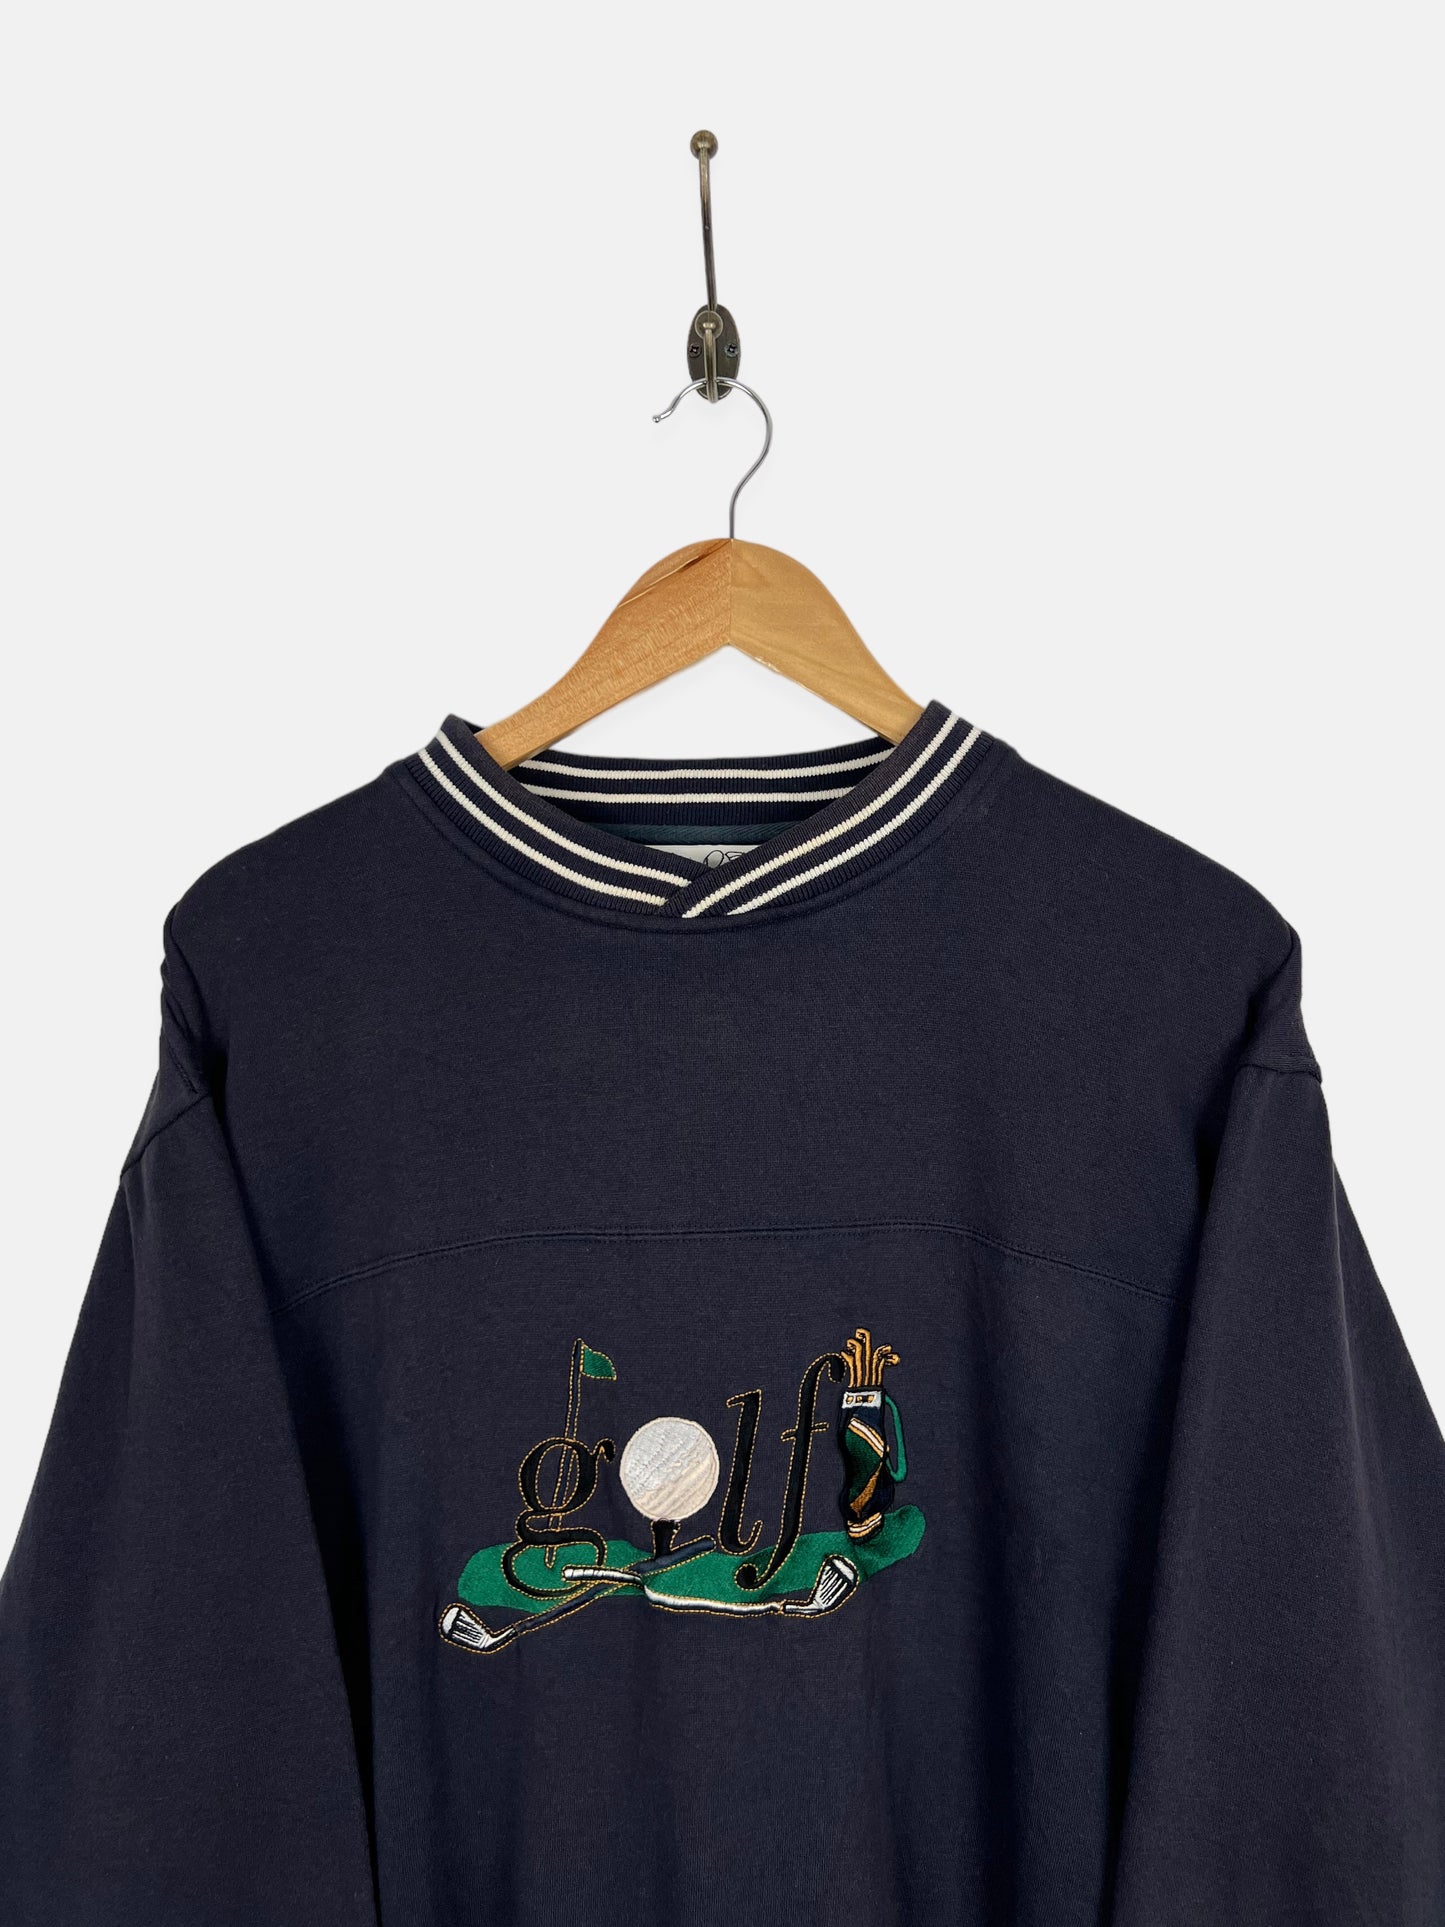 90's Golf Embroidered Vintage Sweatshirt Size 12-14